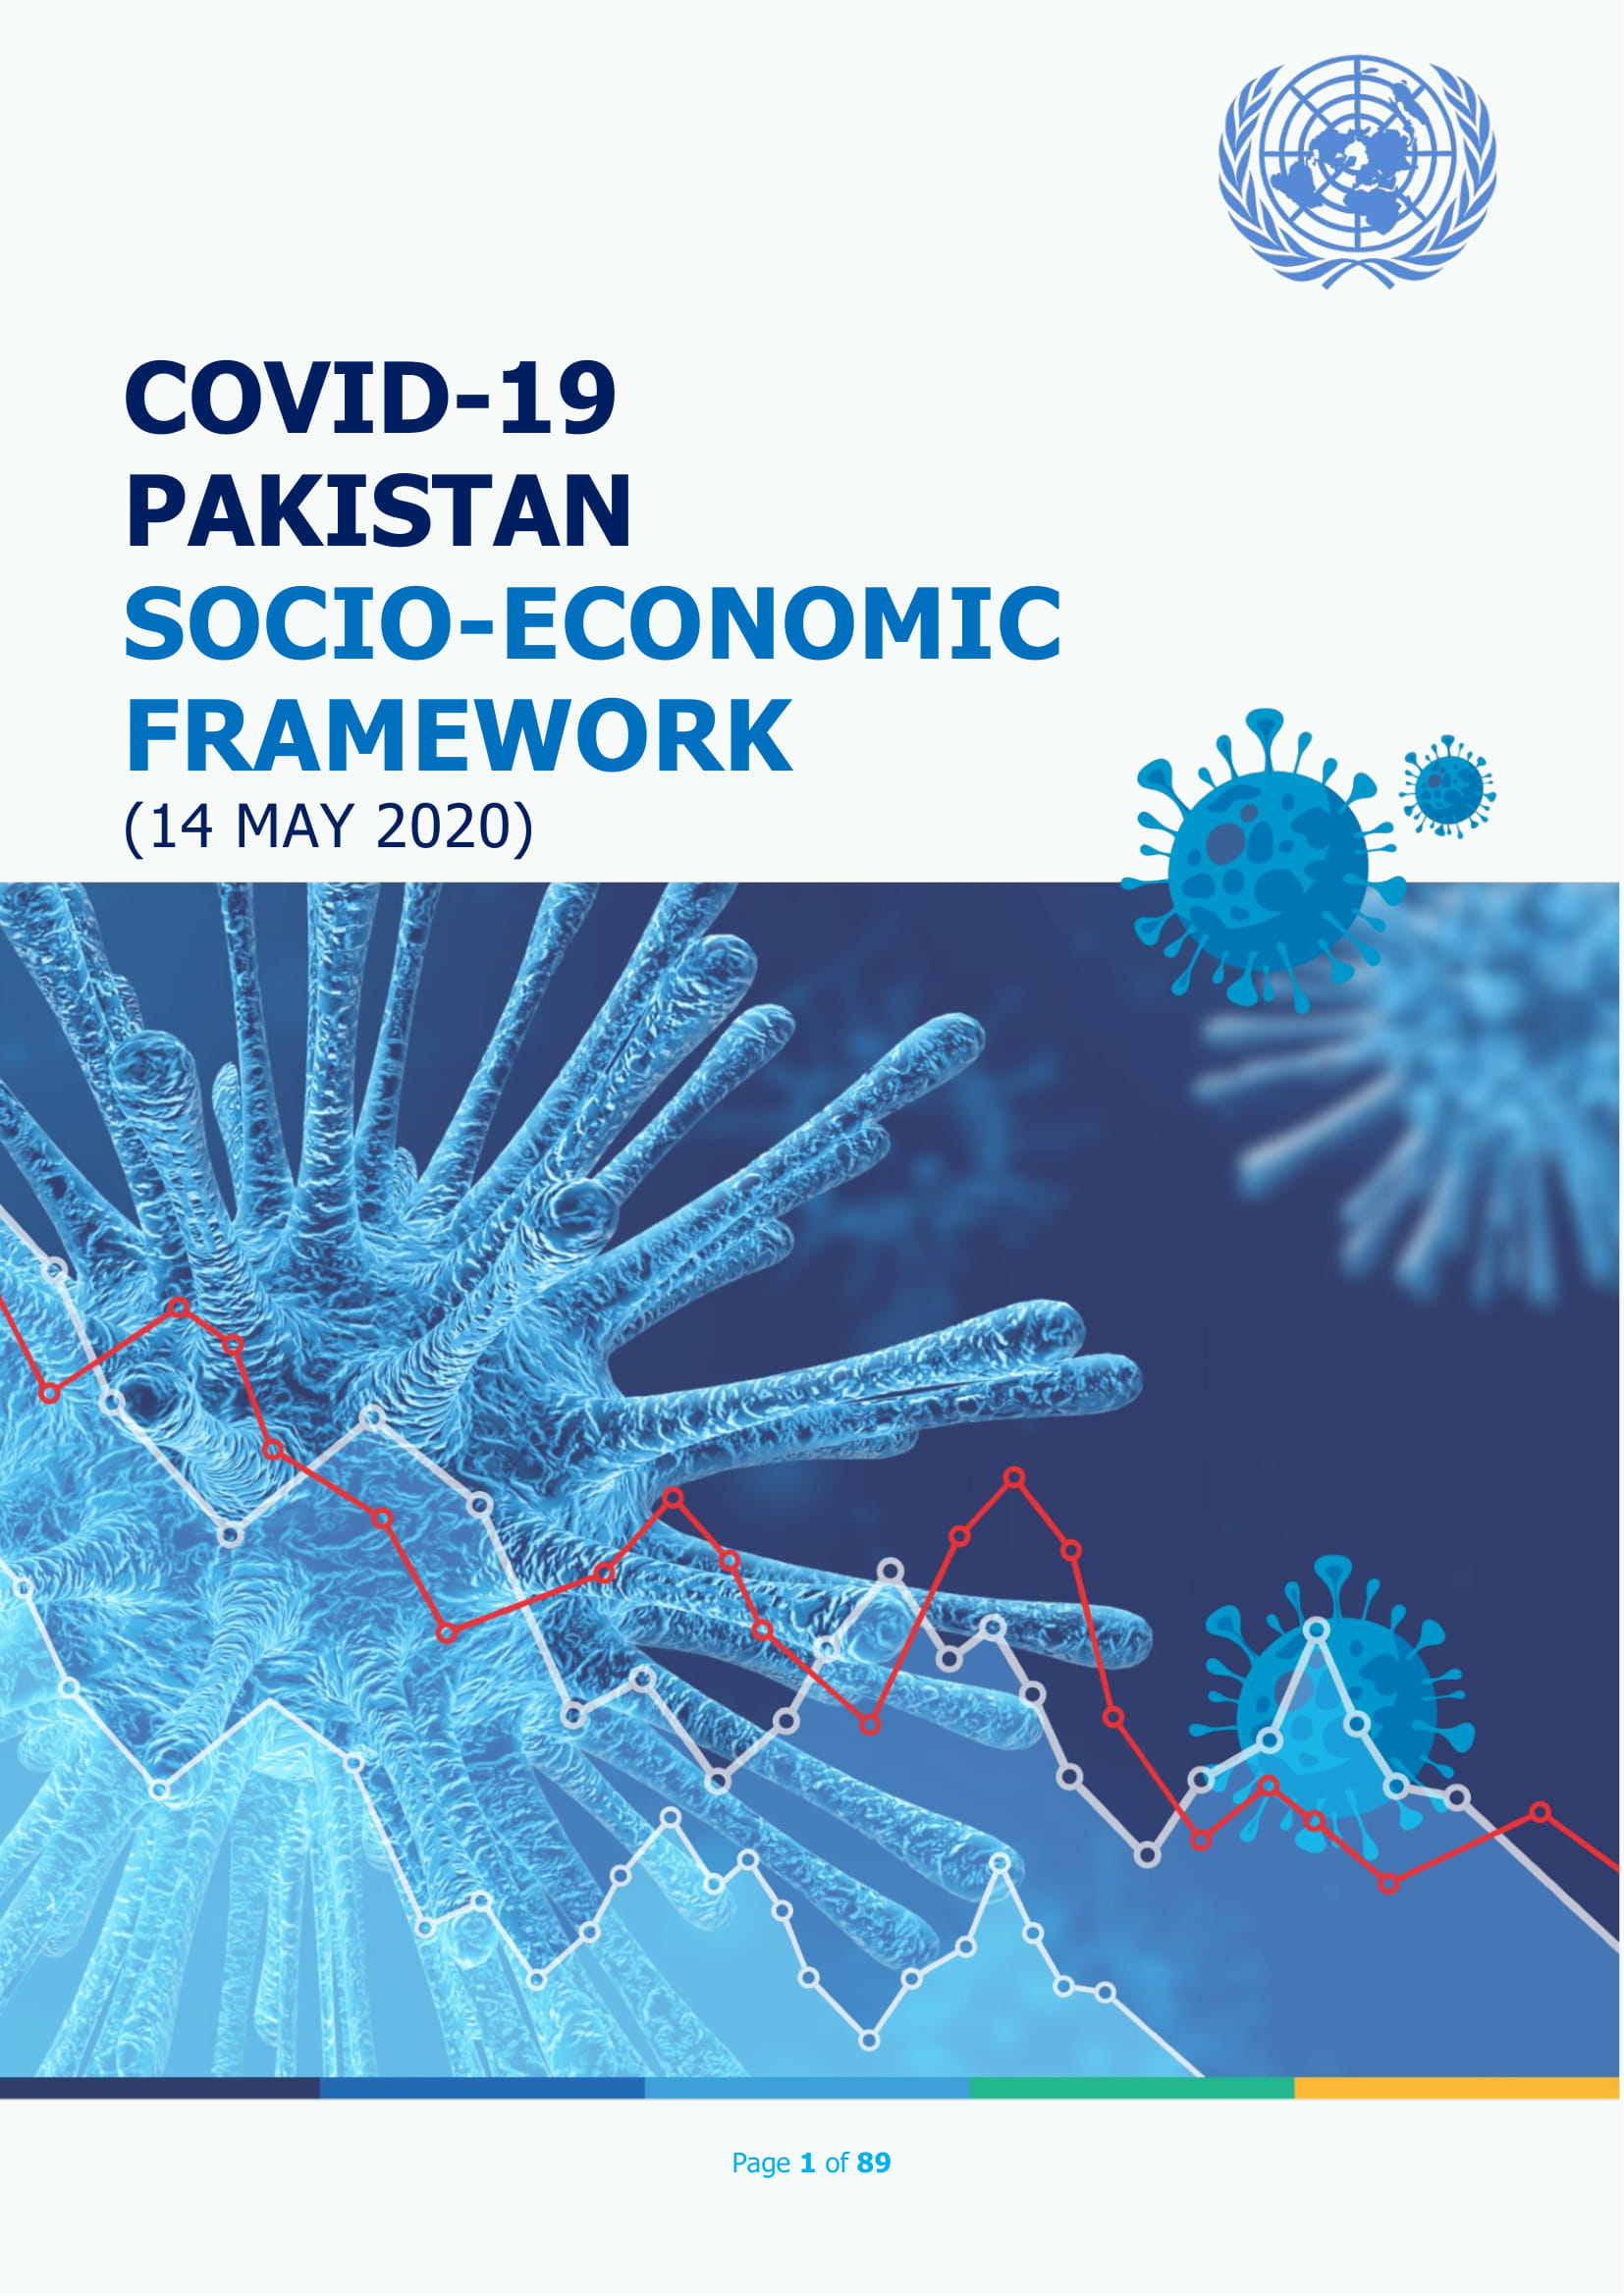 COVID-19 Pakistan: Socio-economic Framework 